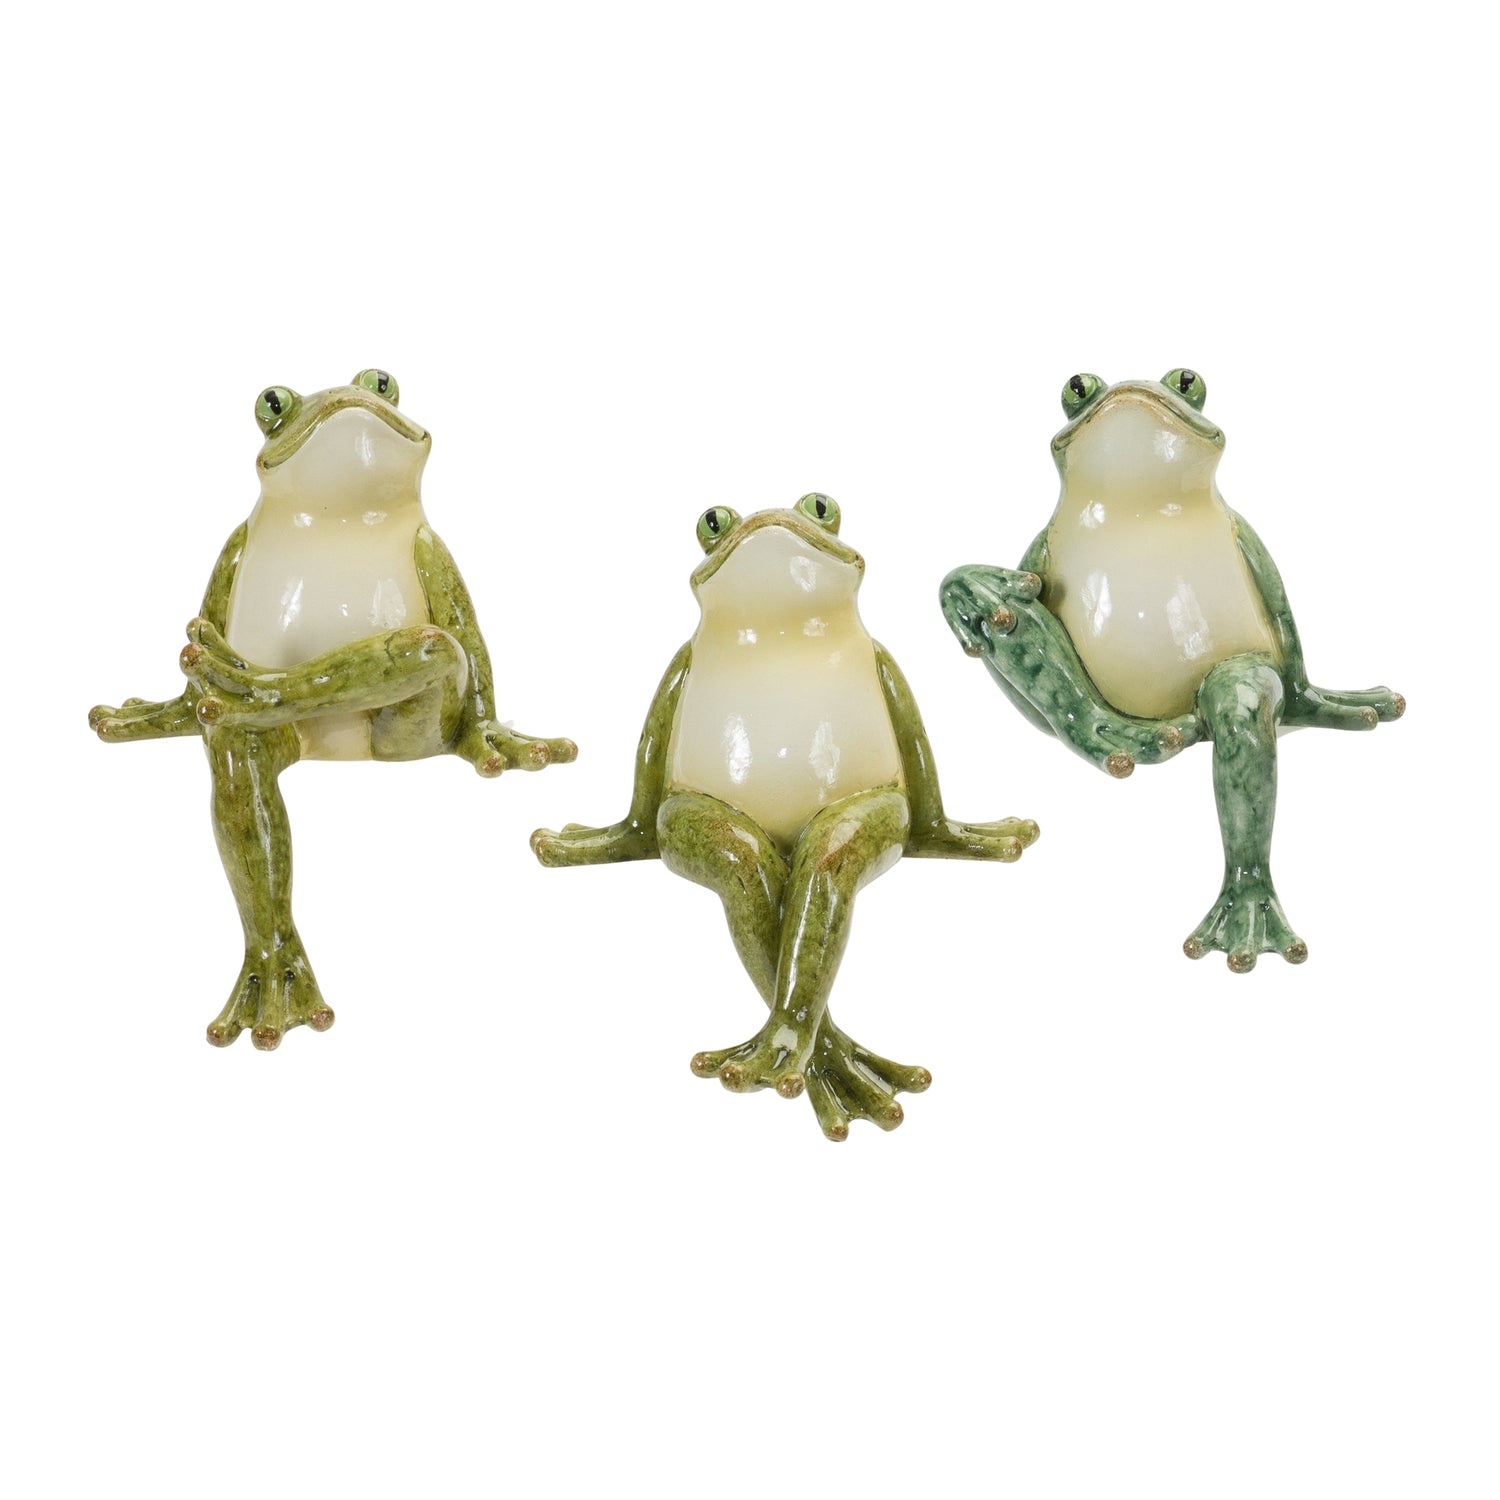 Frog Shelf Sitters (Set of 3) 4"H Resin